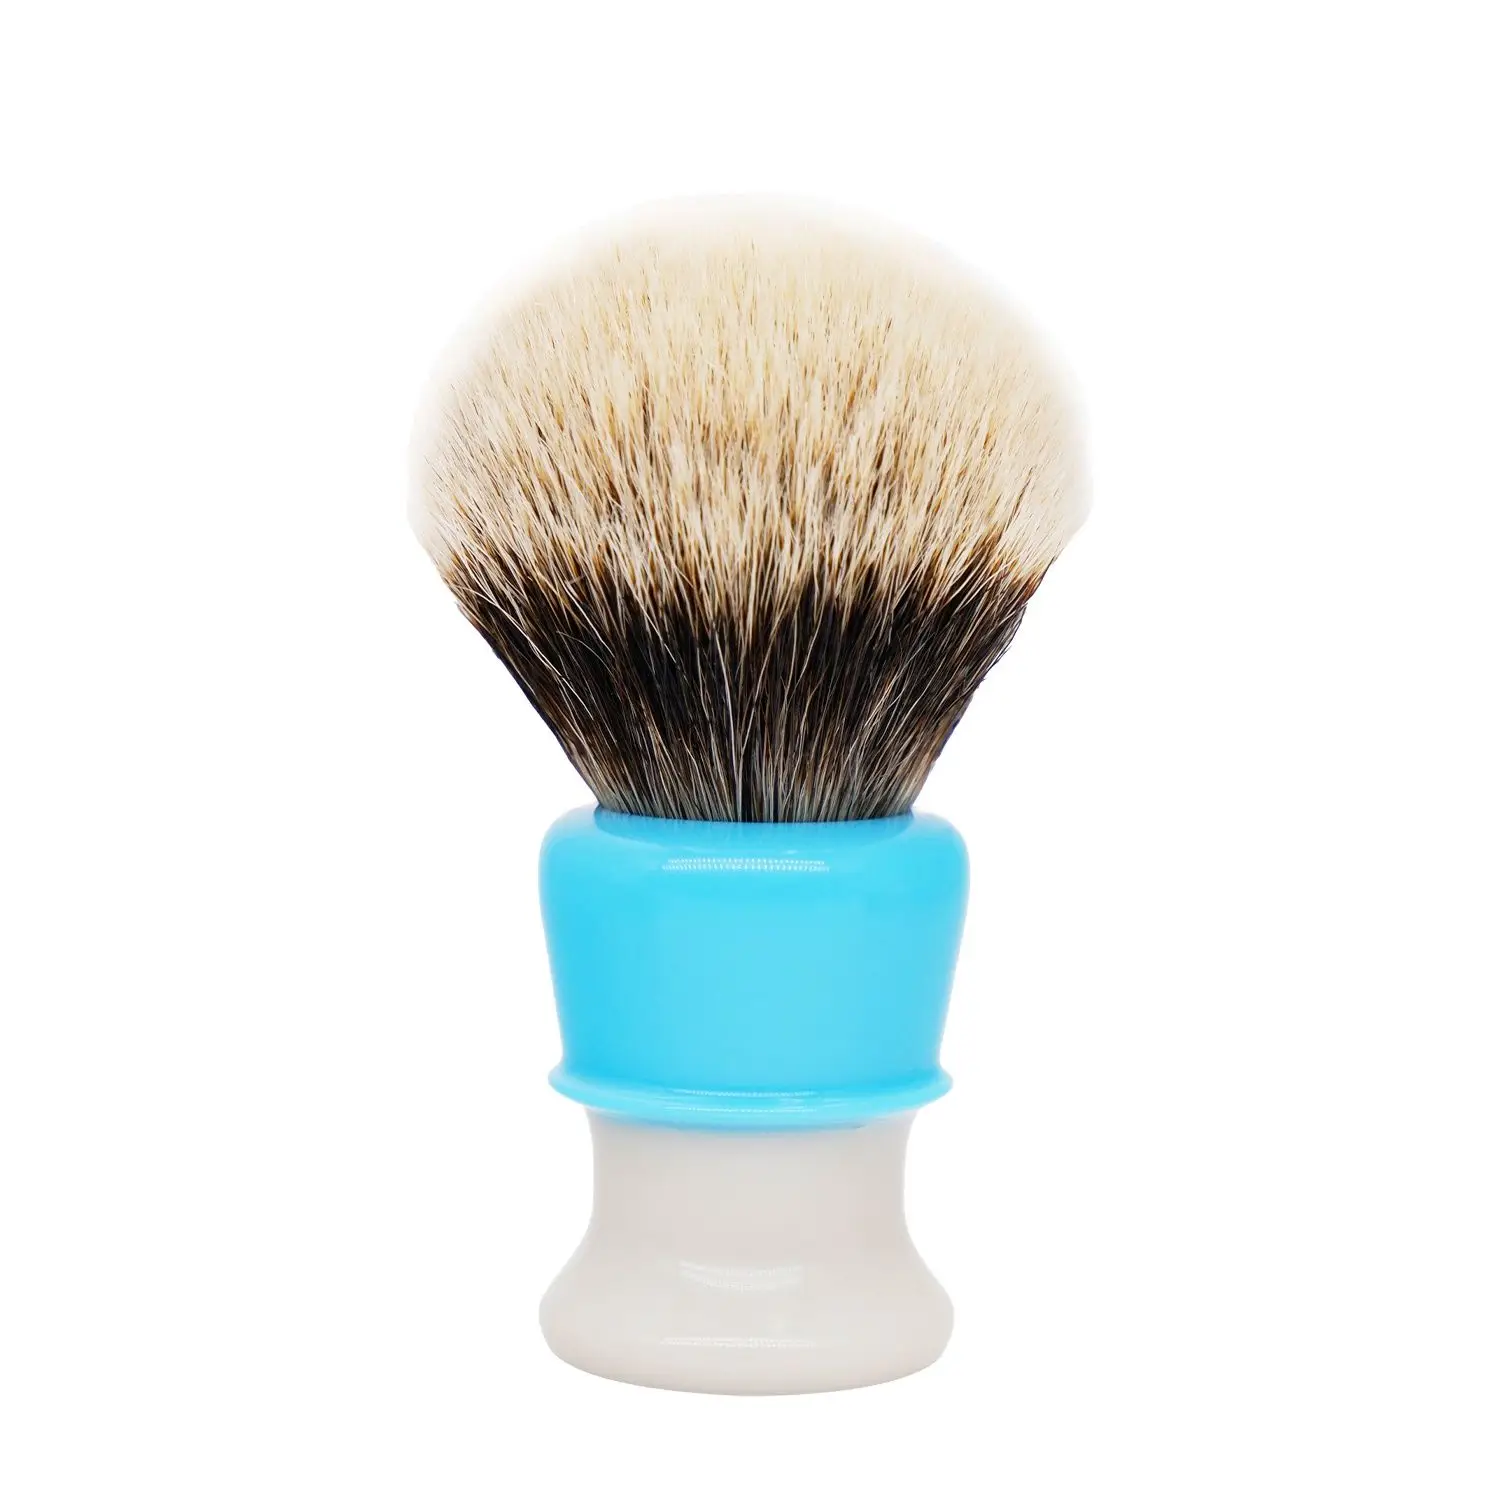 Boti brush Shaving Brush Blub Captain Three Band with Cream and Blue Sky Resin Handle Beauty Beard Brushes Tools